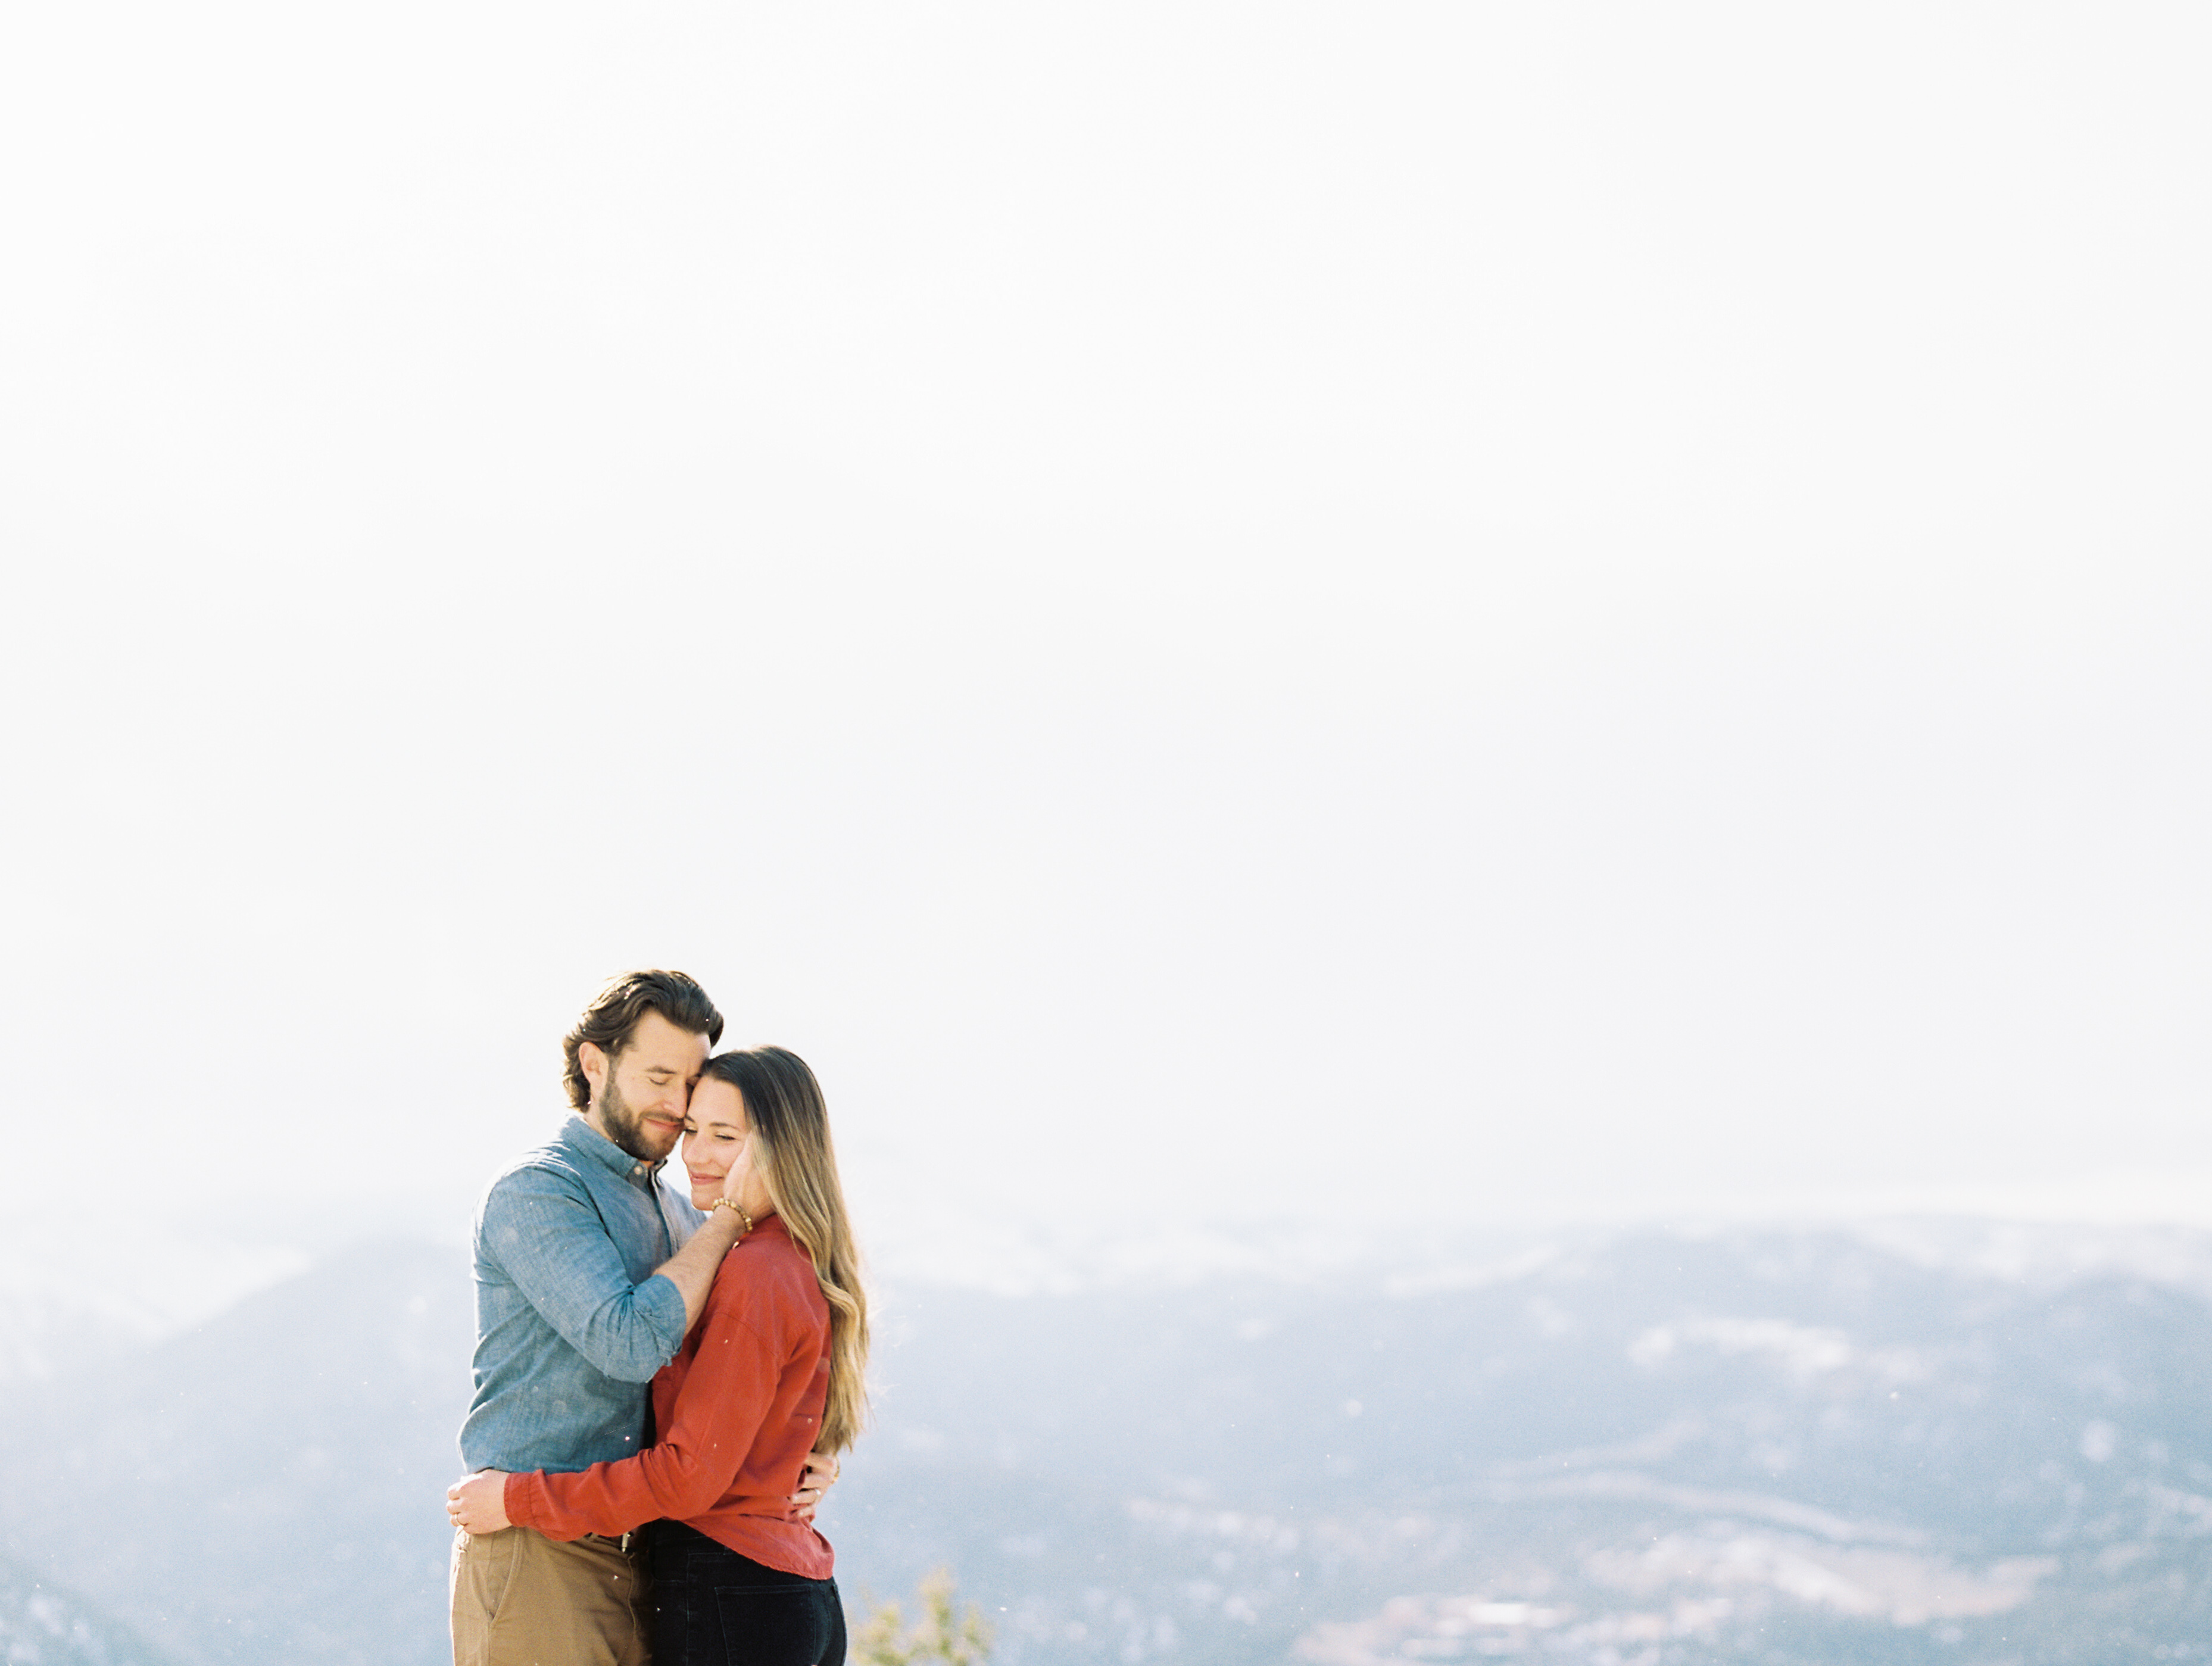 sweet couple nuzzling on mountain overlook